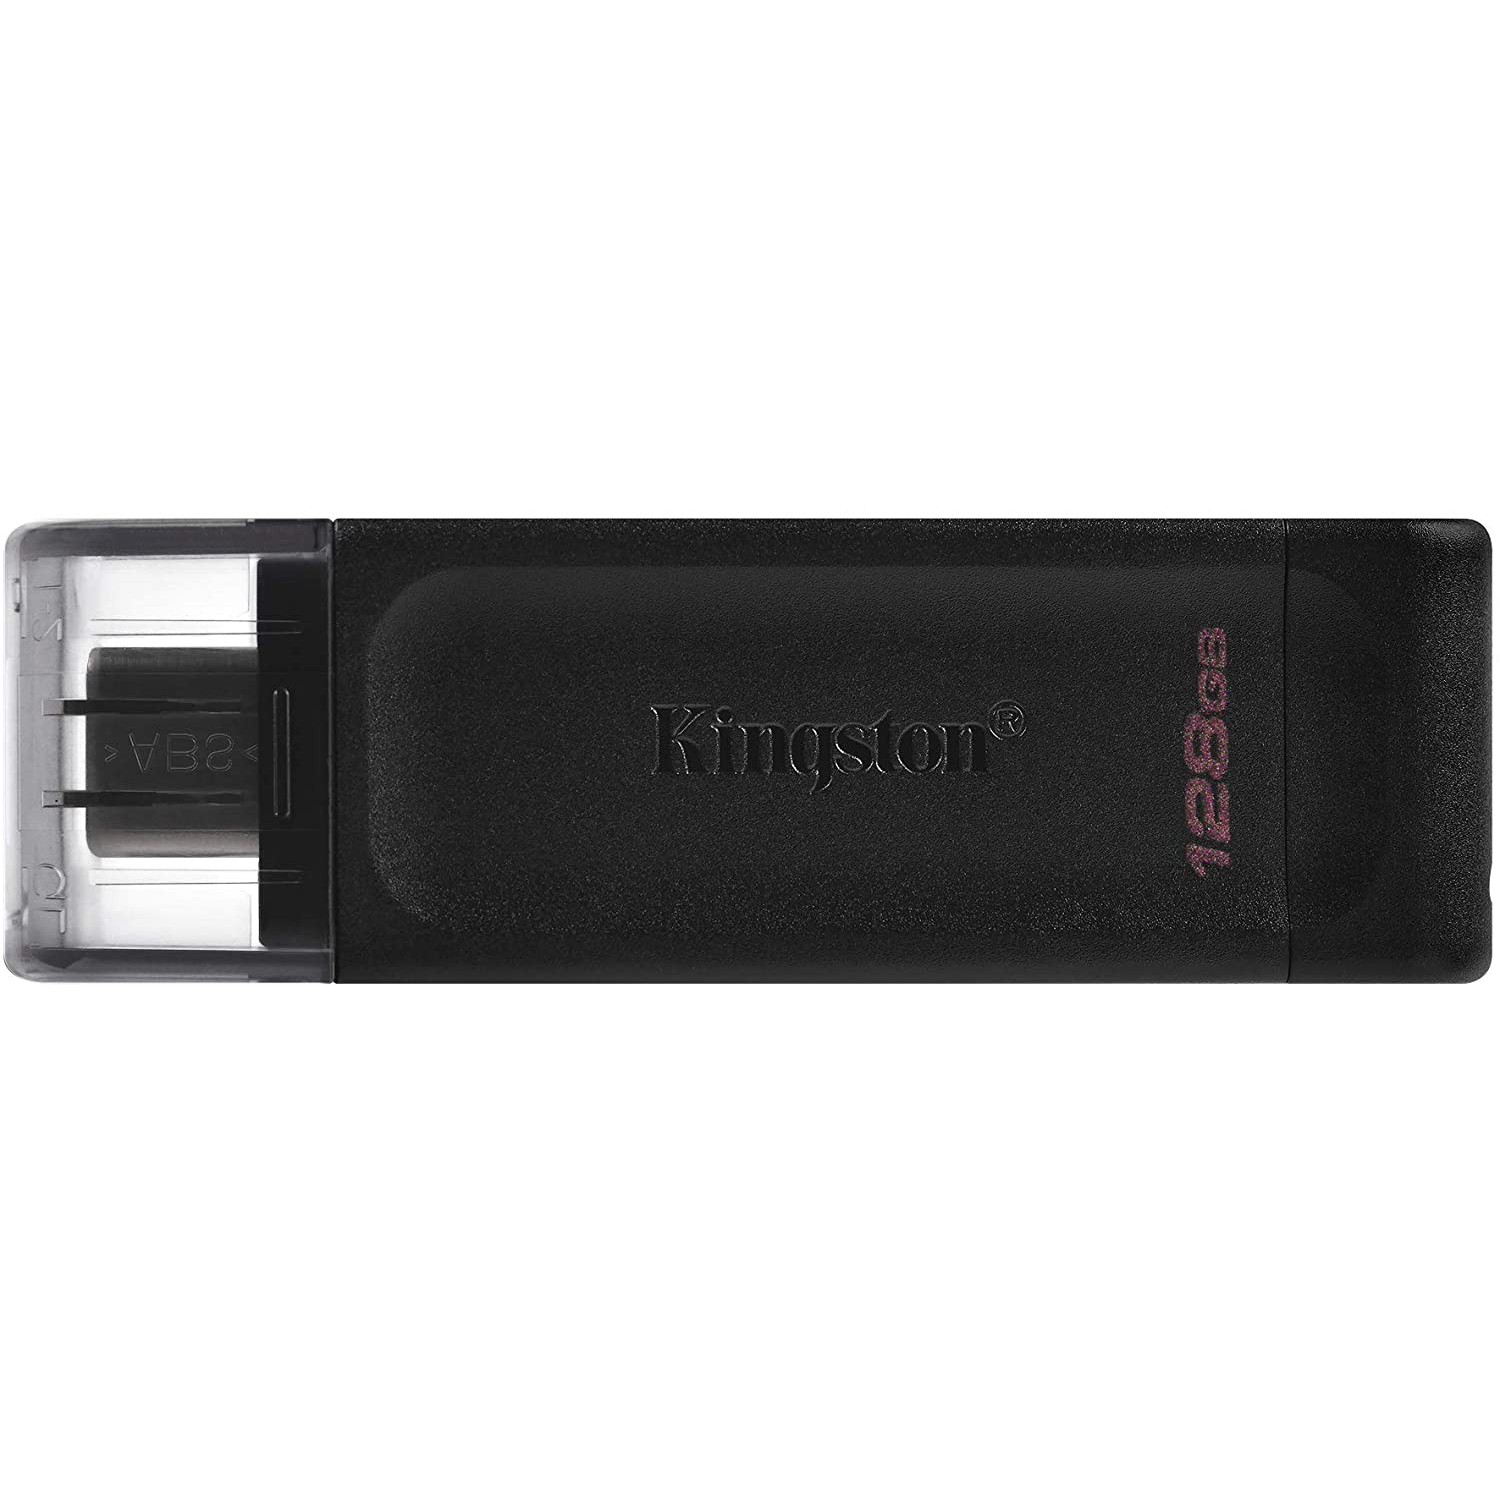 Original Kingston DataTraveler 70 128GB Black USB-C 3.2 Flash Drive (DT70/128GB)